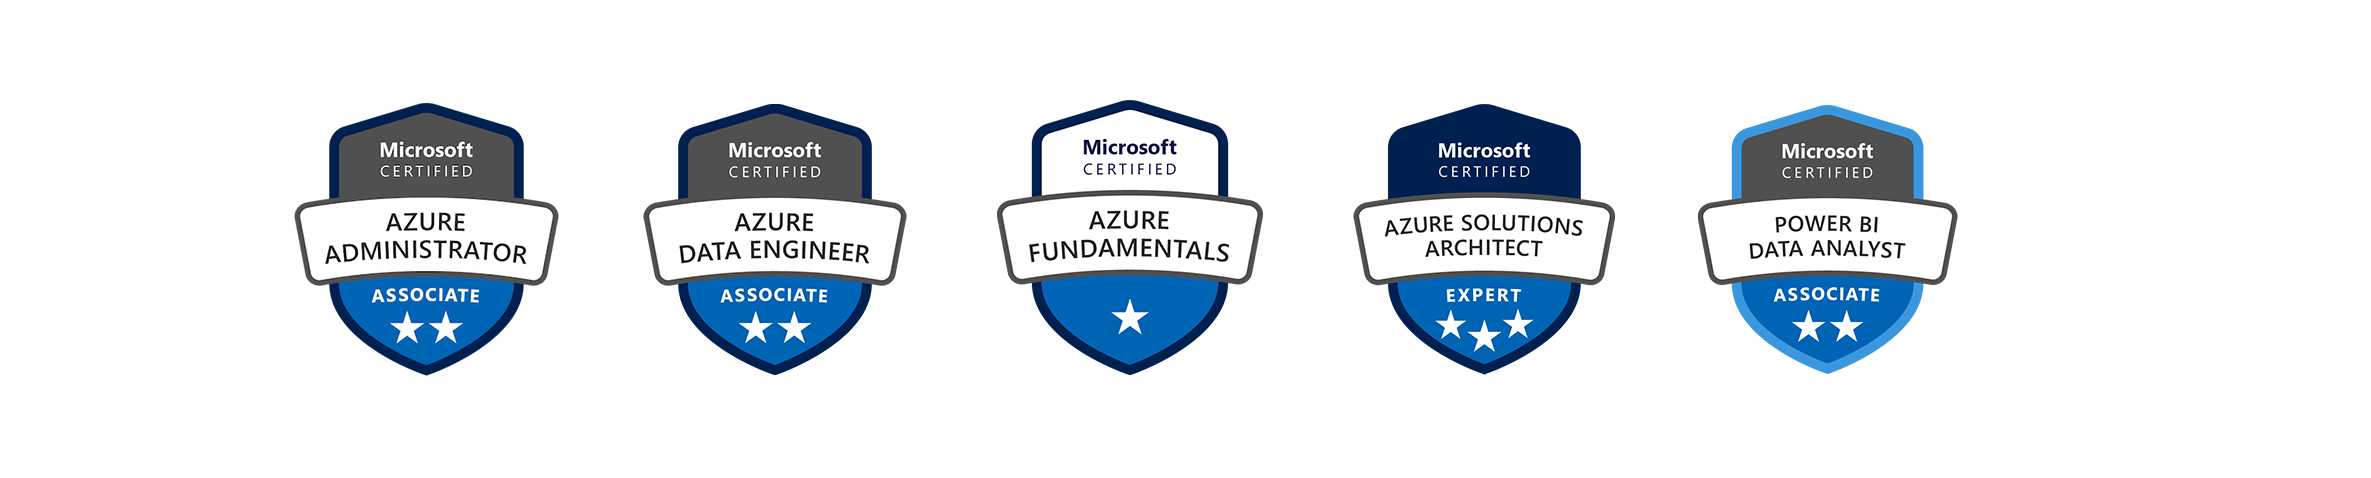 Microsoft Certified Badges